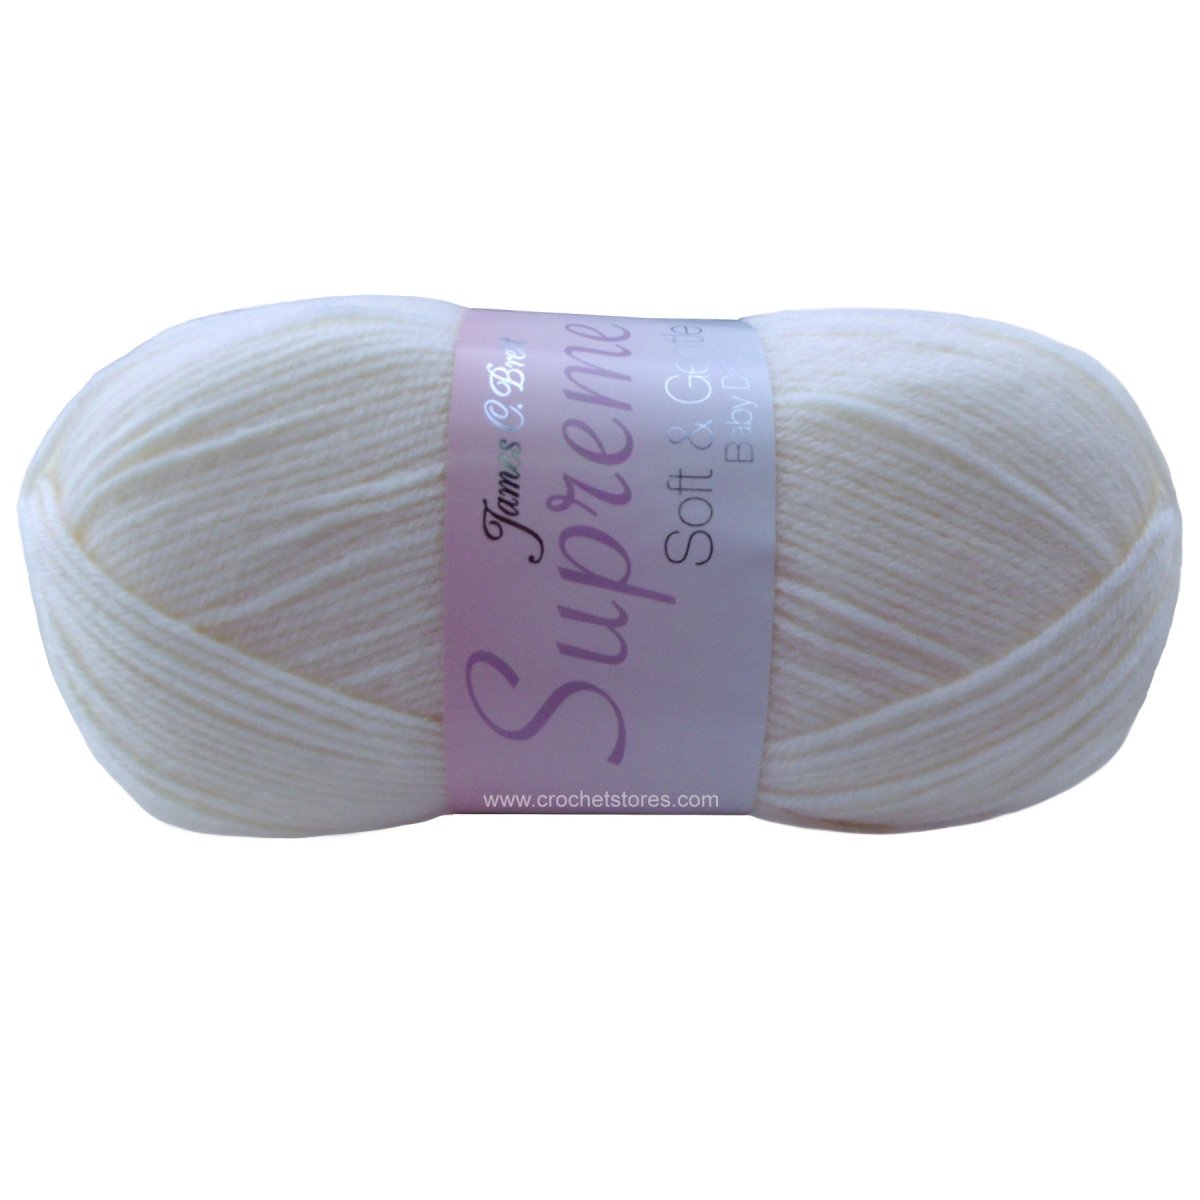 SUPREME BABY DK - CrochetstoresSNG95060019097557